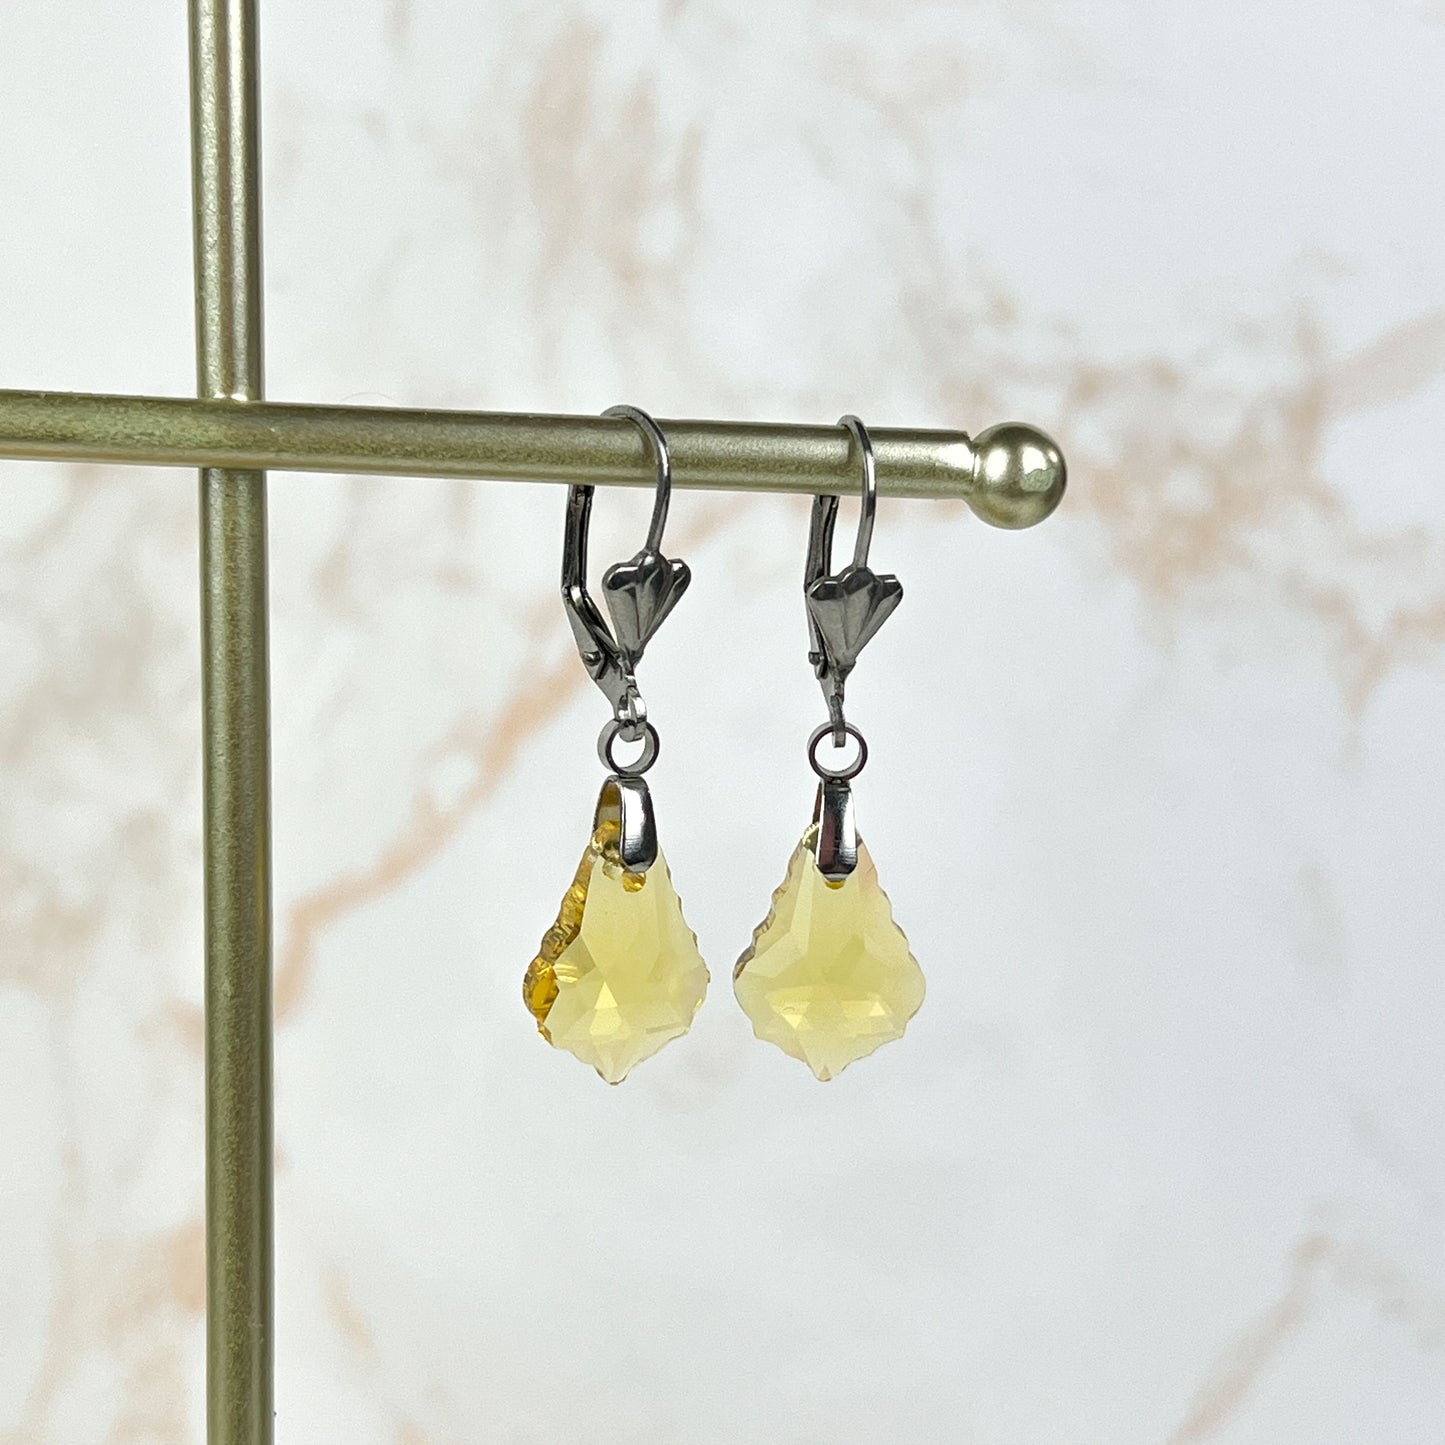 Crystal sparkling earrings, Art Deco stainless steel closures